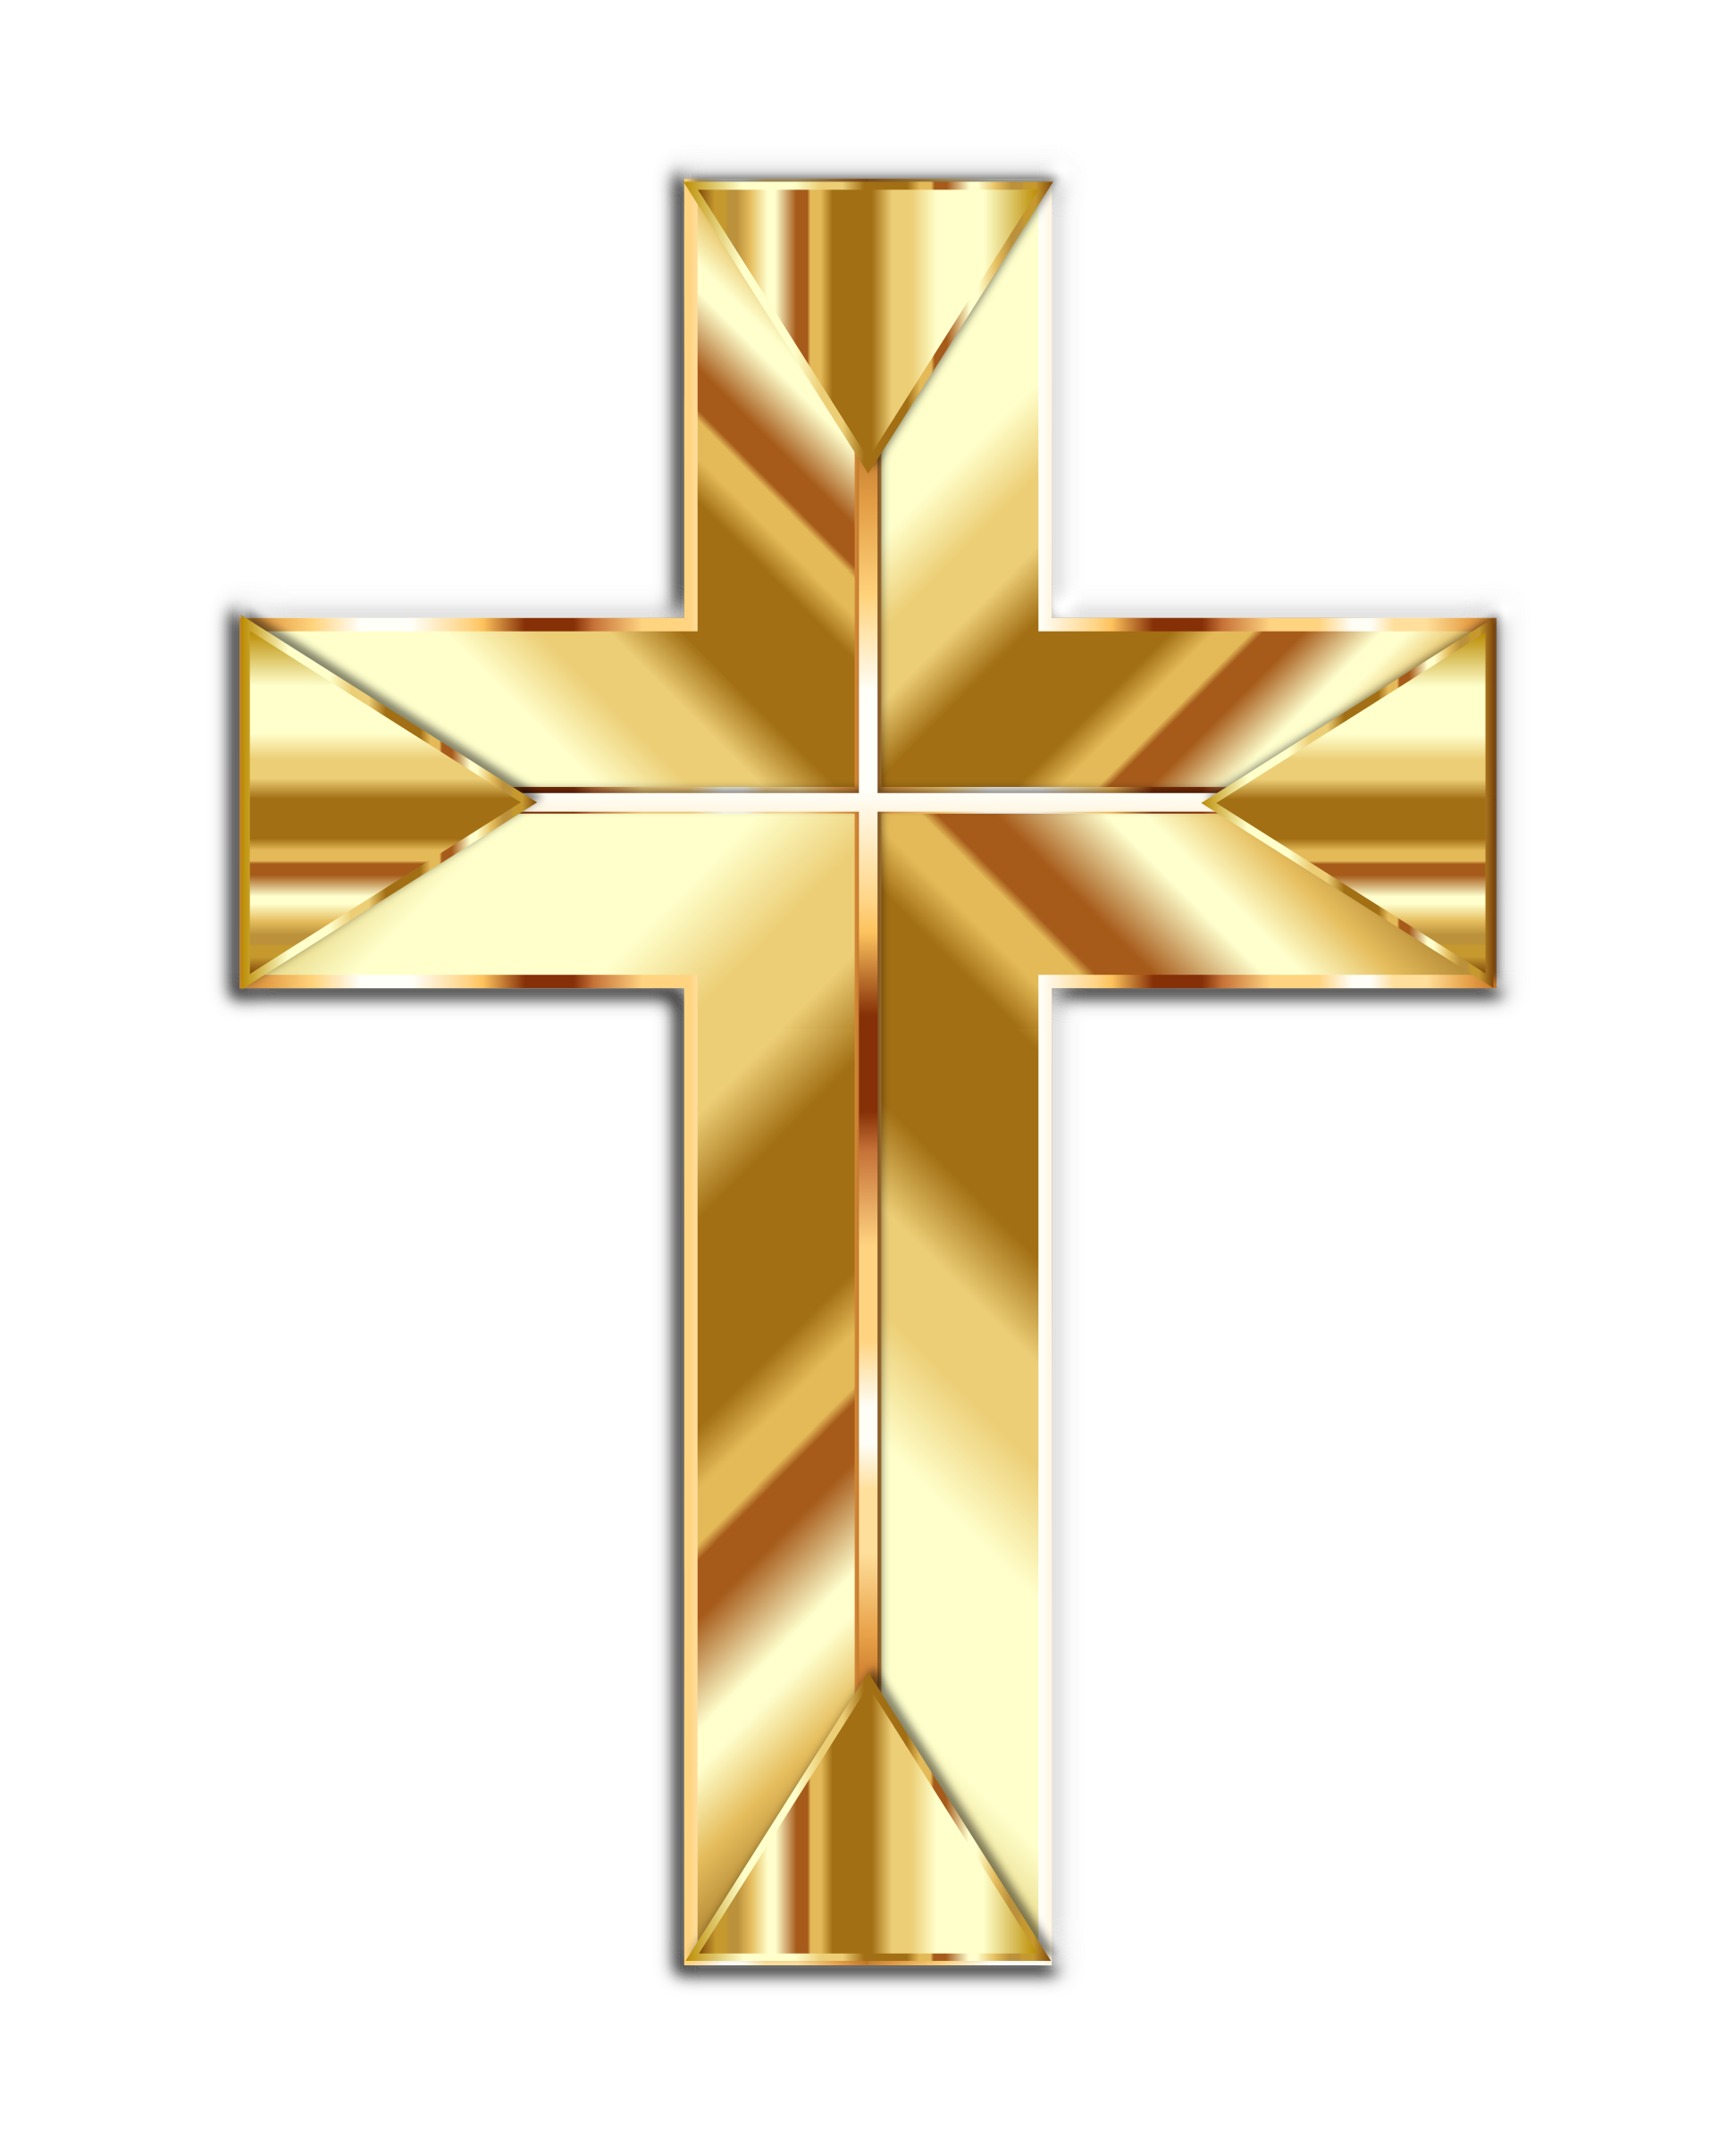 Jesus Cross Images Hd Download Free : Free Download Jesus Cross Hd ...